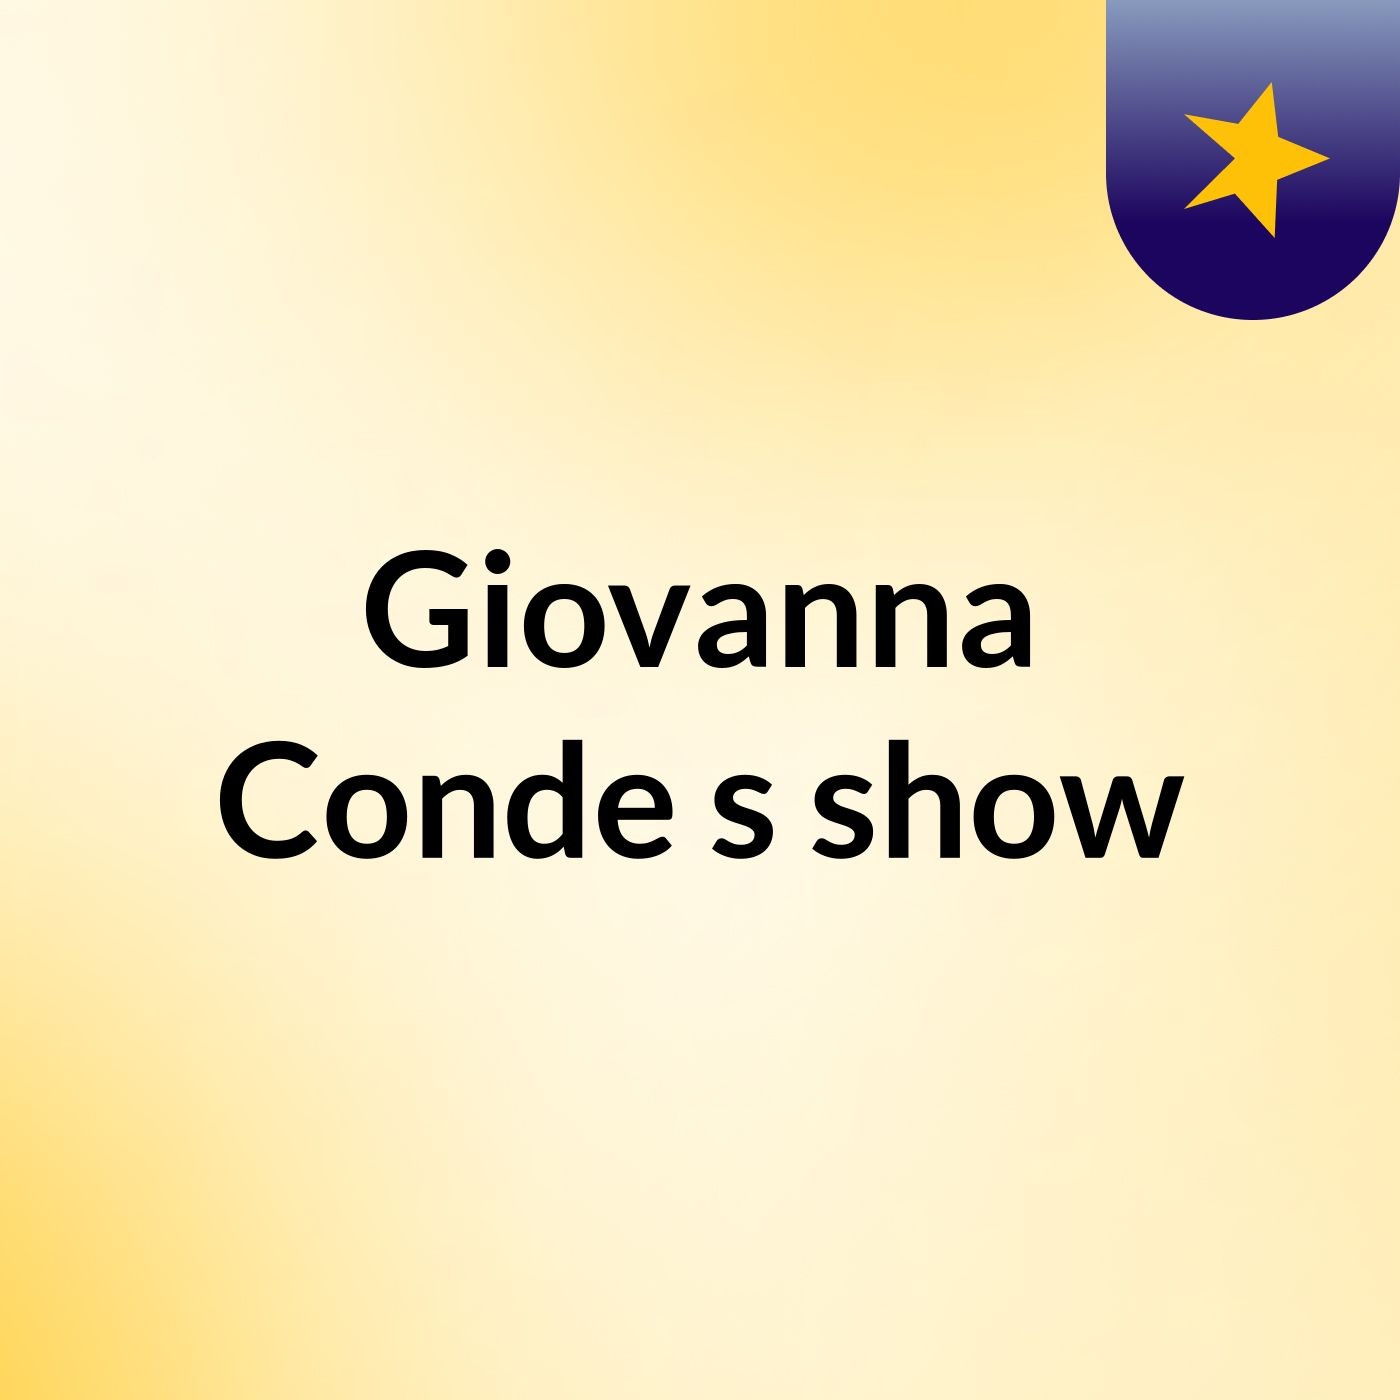 Giovanna Conde's show